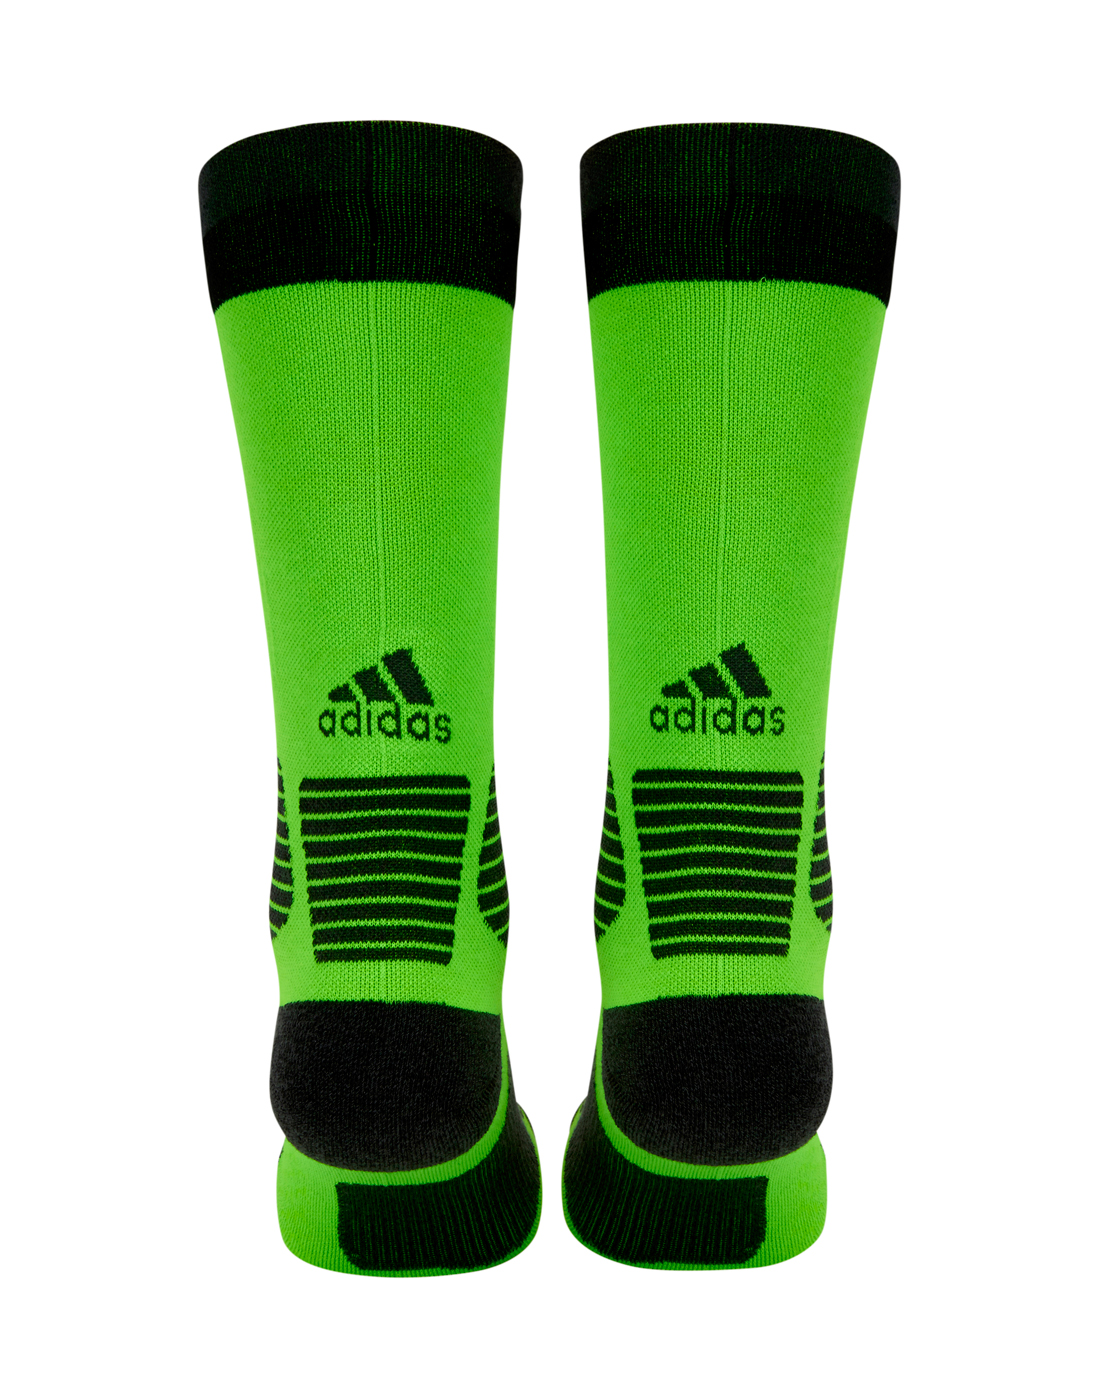 adidas Adult Ace Football Socks - Green | Life Style Sports EU